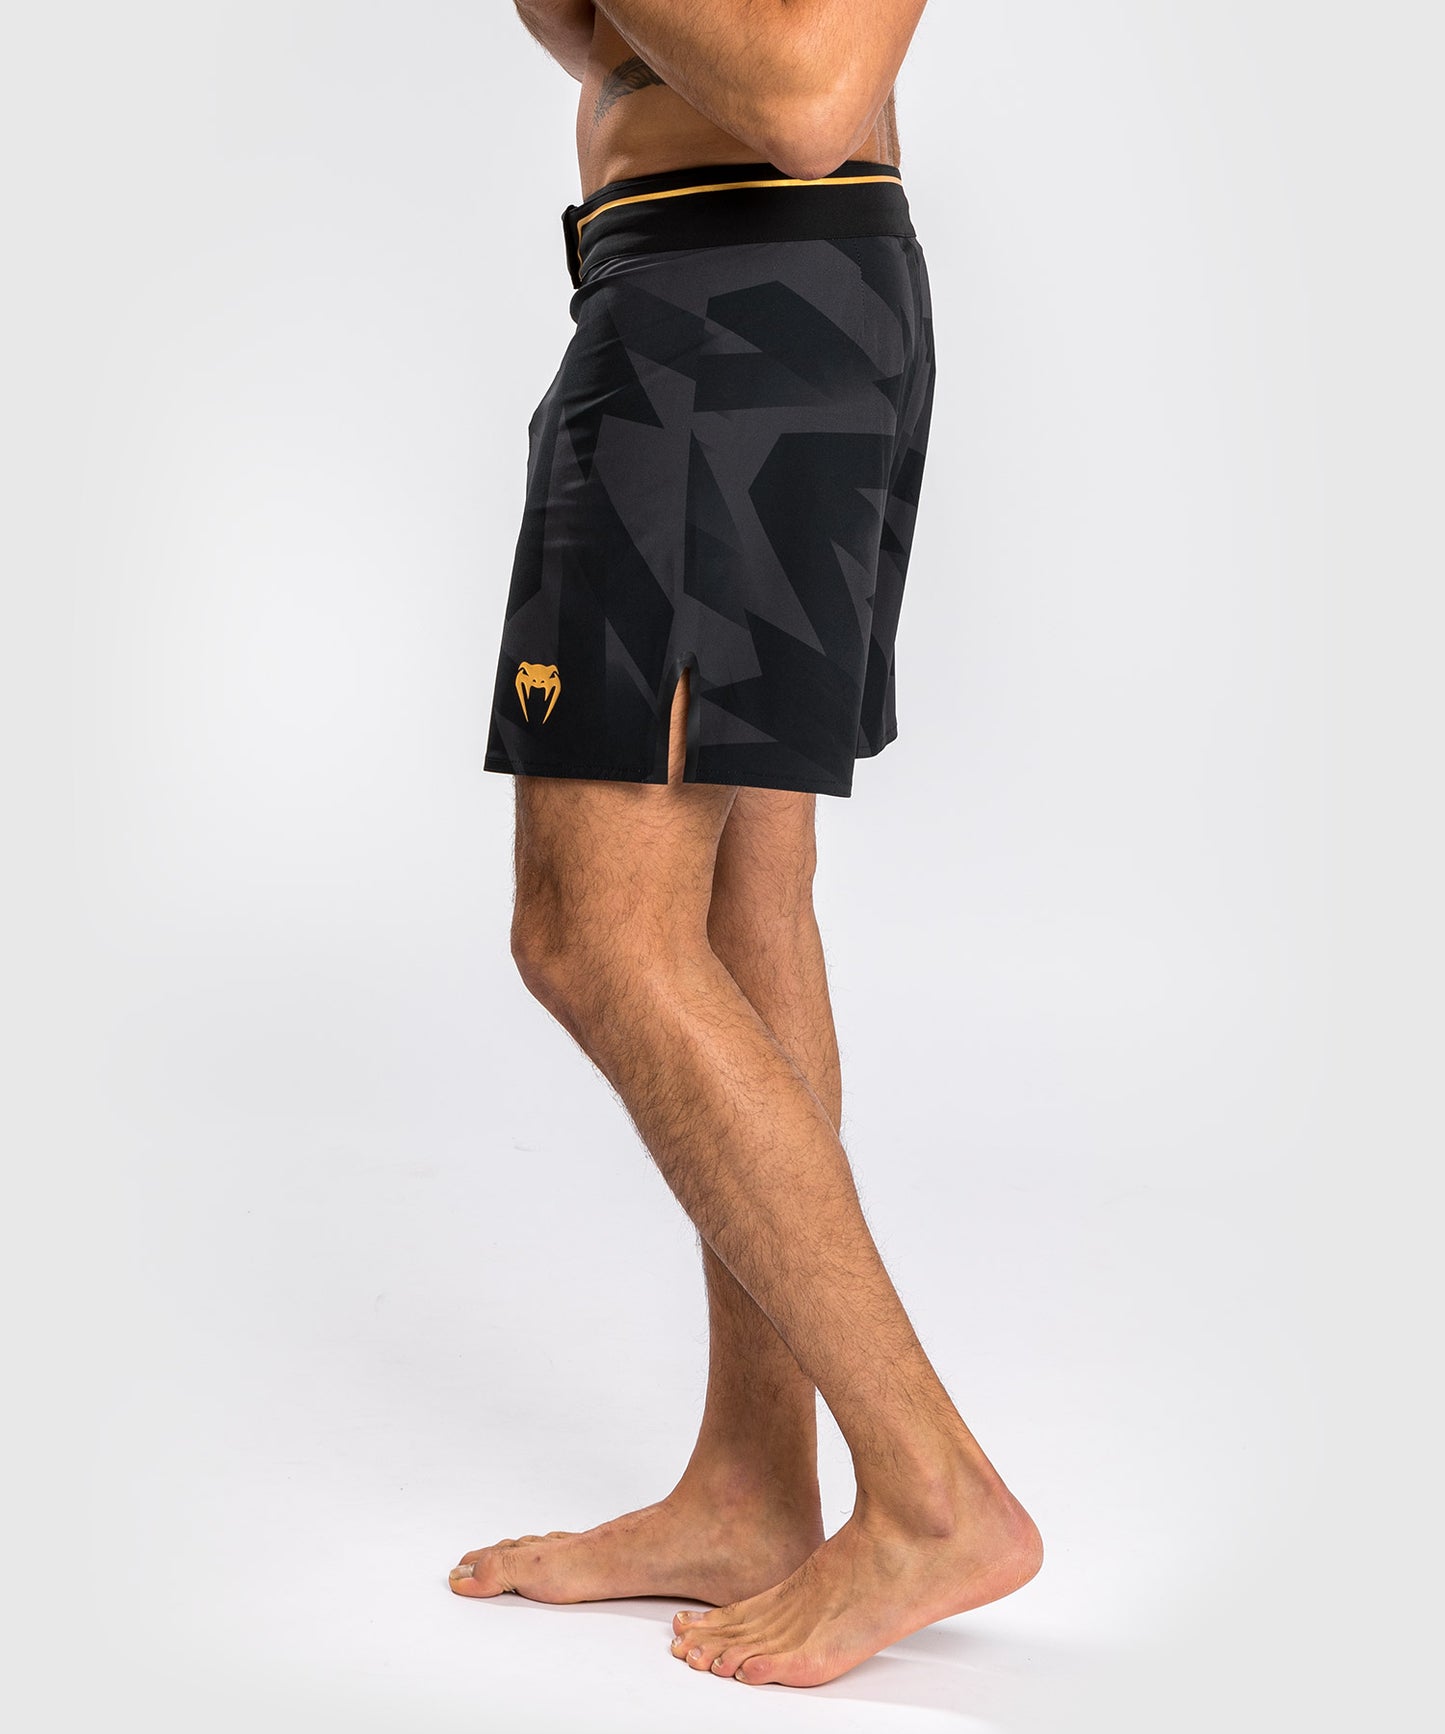 Pantalones Cortos de MMA Venum Razor - Negro/Oro